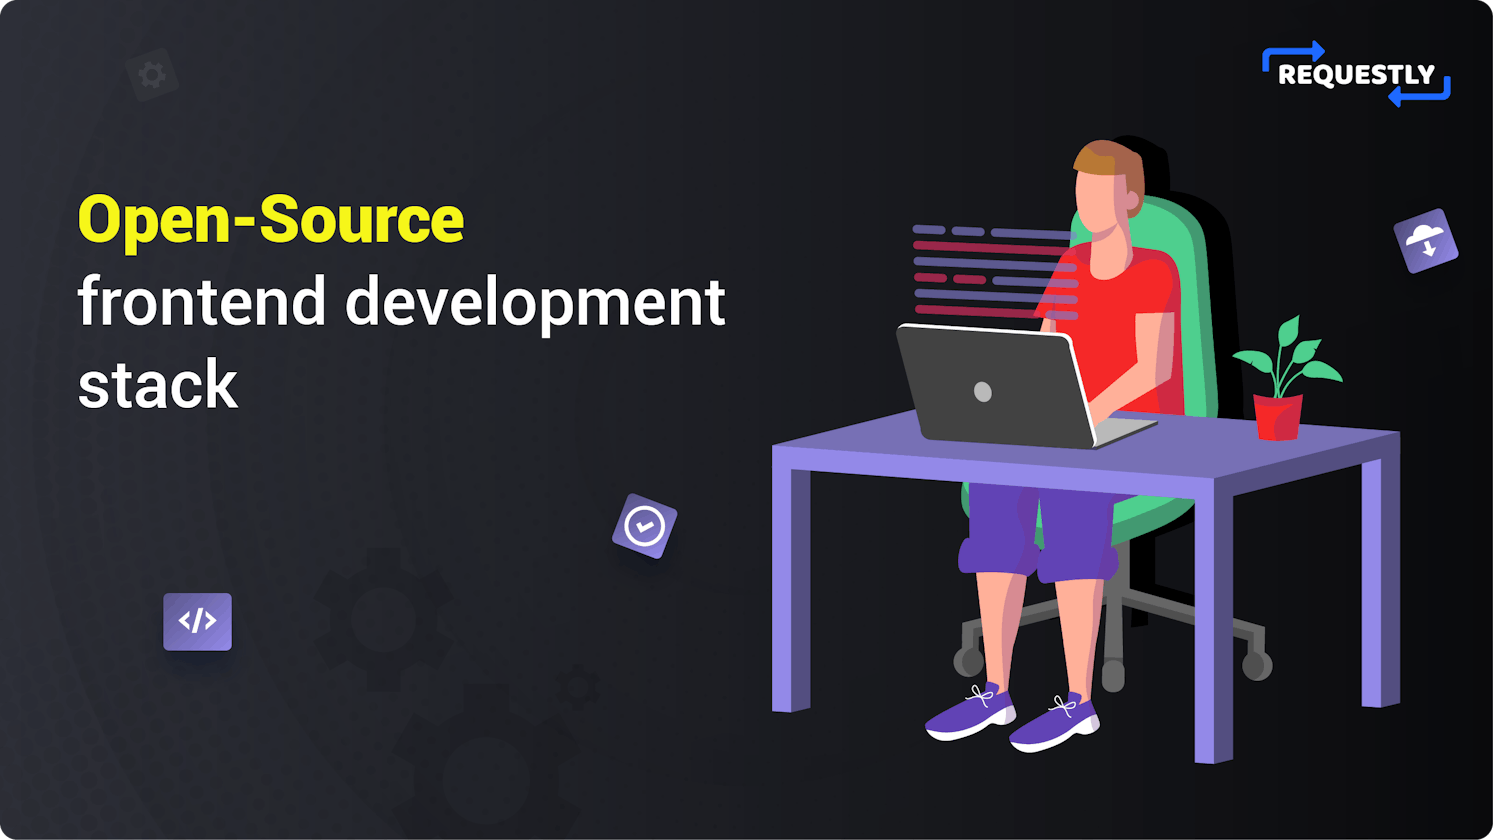 Open-source frontend development stack